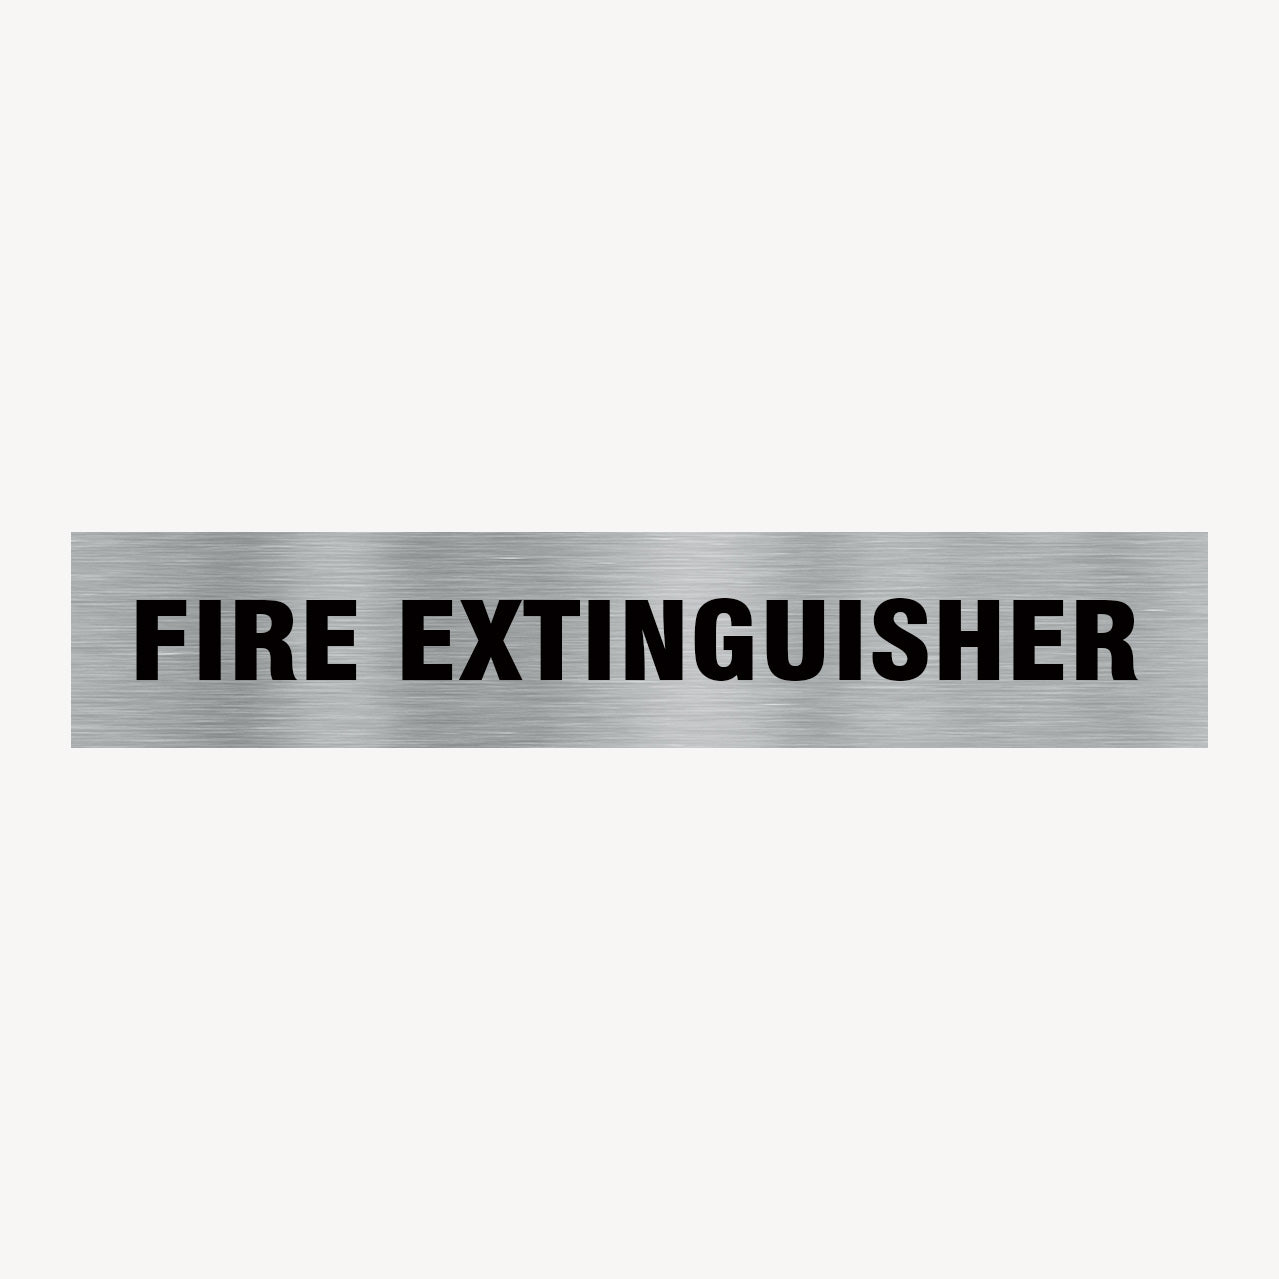 FIRE EXTINGUISHER SIGN - BUY ONLINE - GET SIGNS